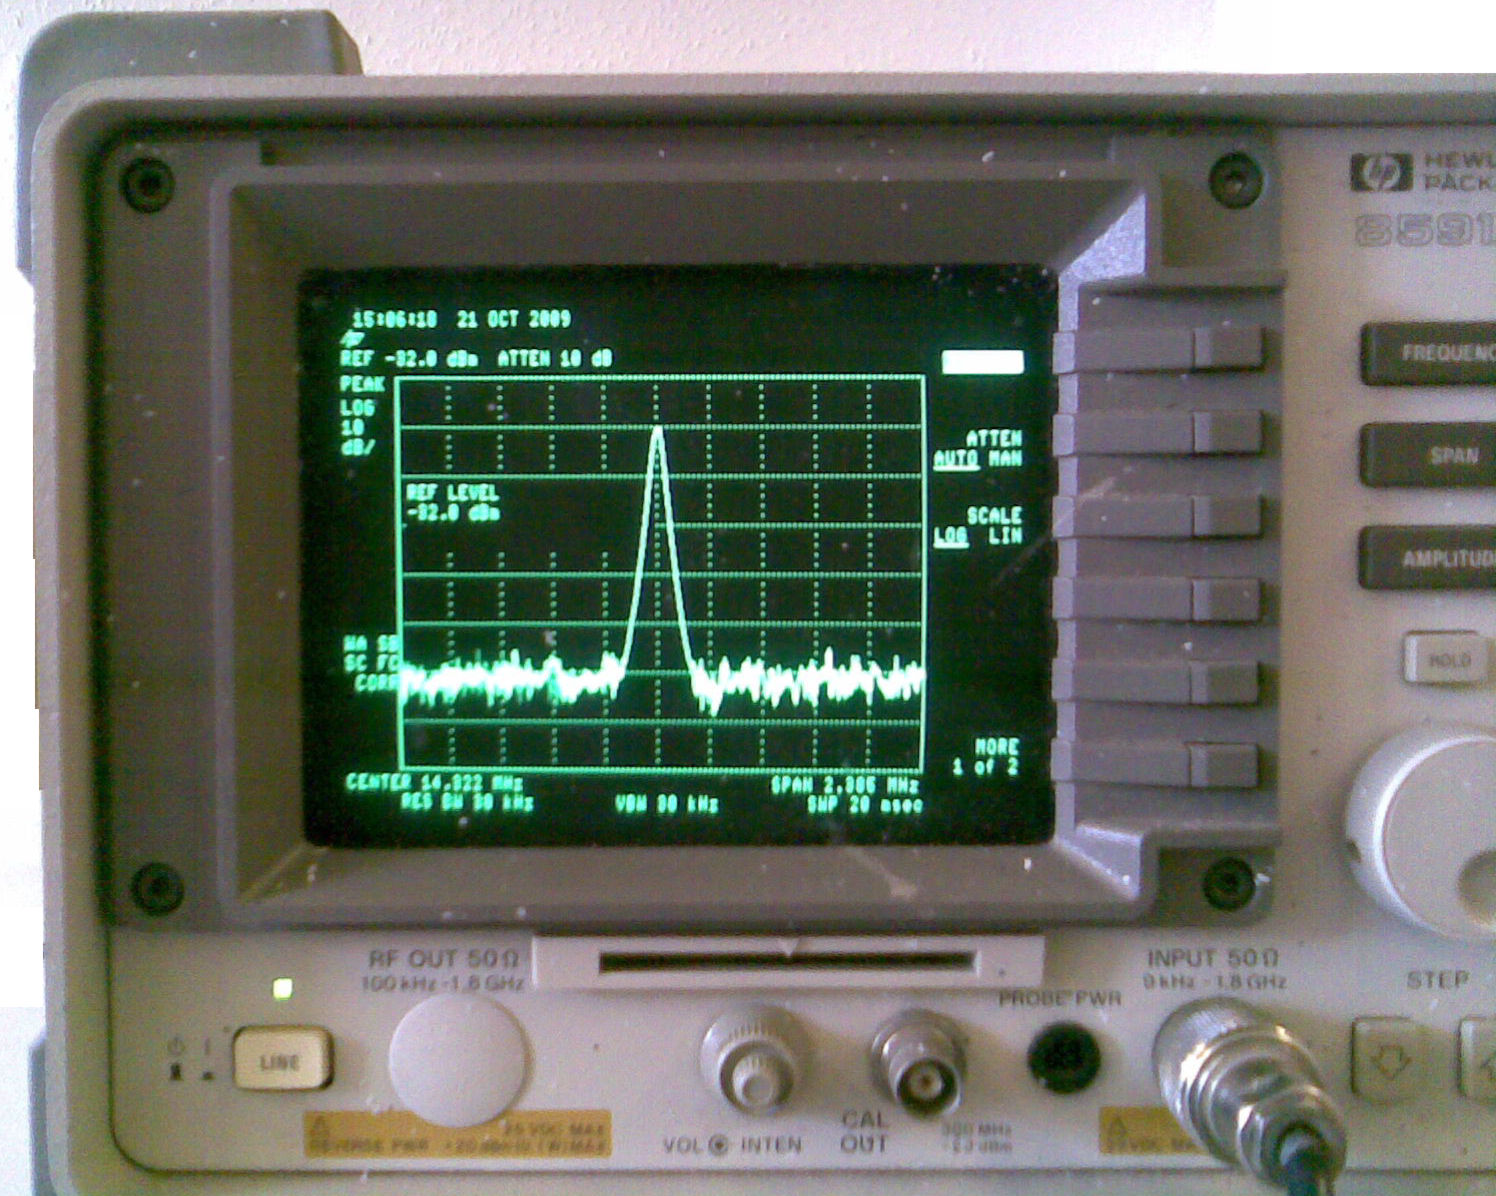 Spectrum analysis of PDR antennae